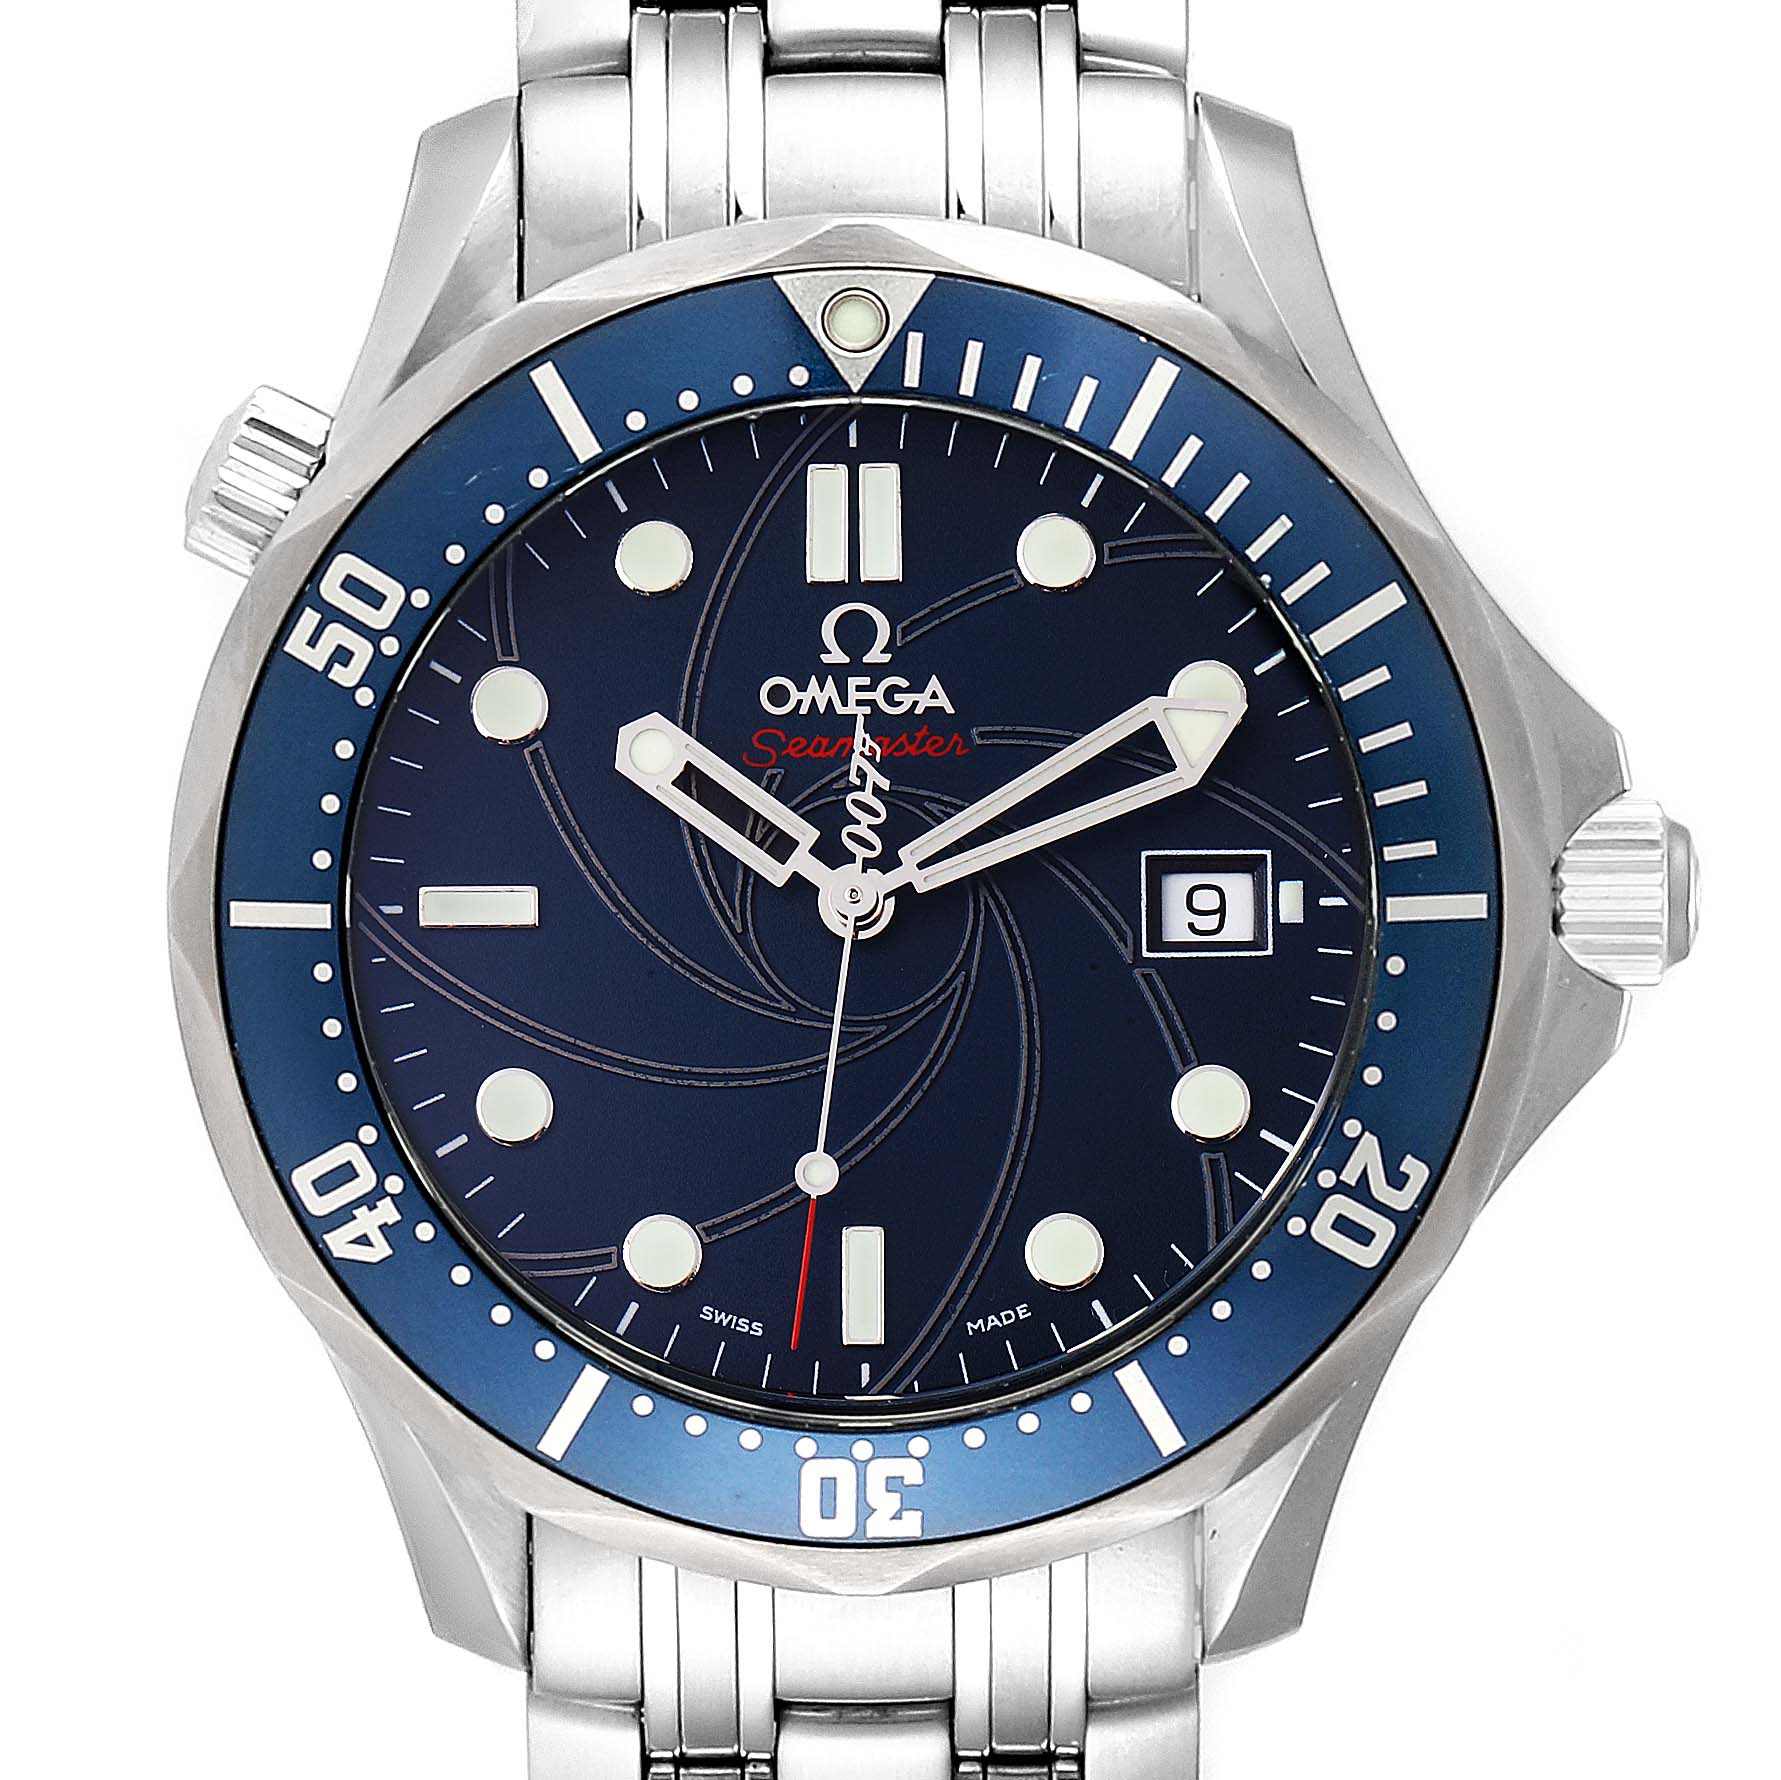 Omega Seamaster Bond 007 Limited Edition Mens Watch 2226.80.00